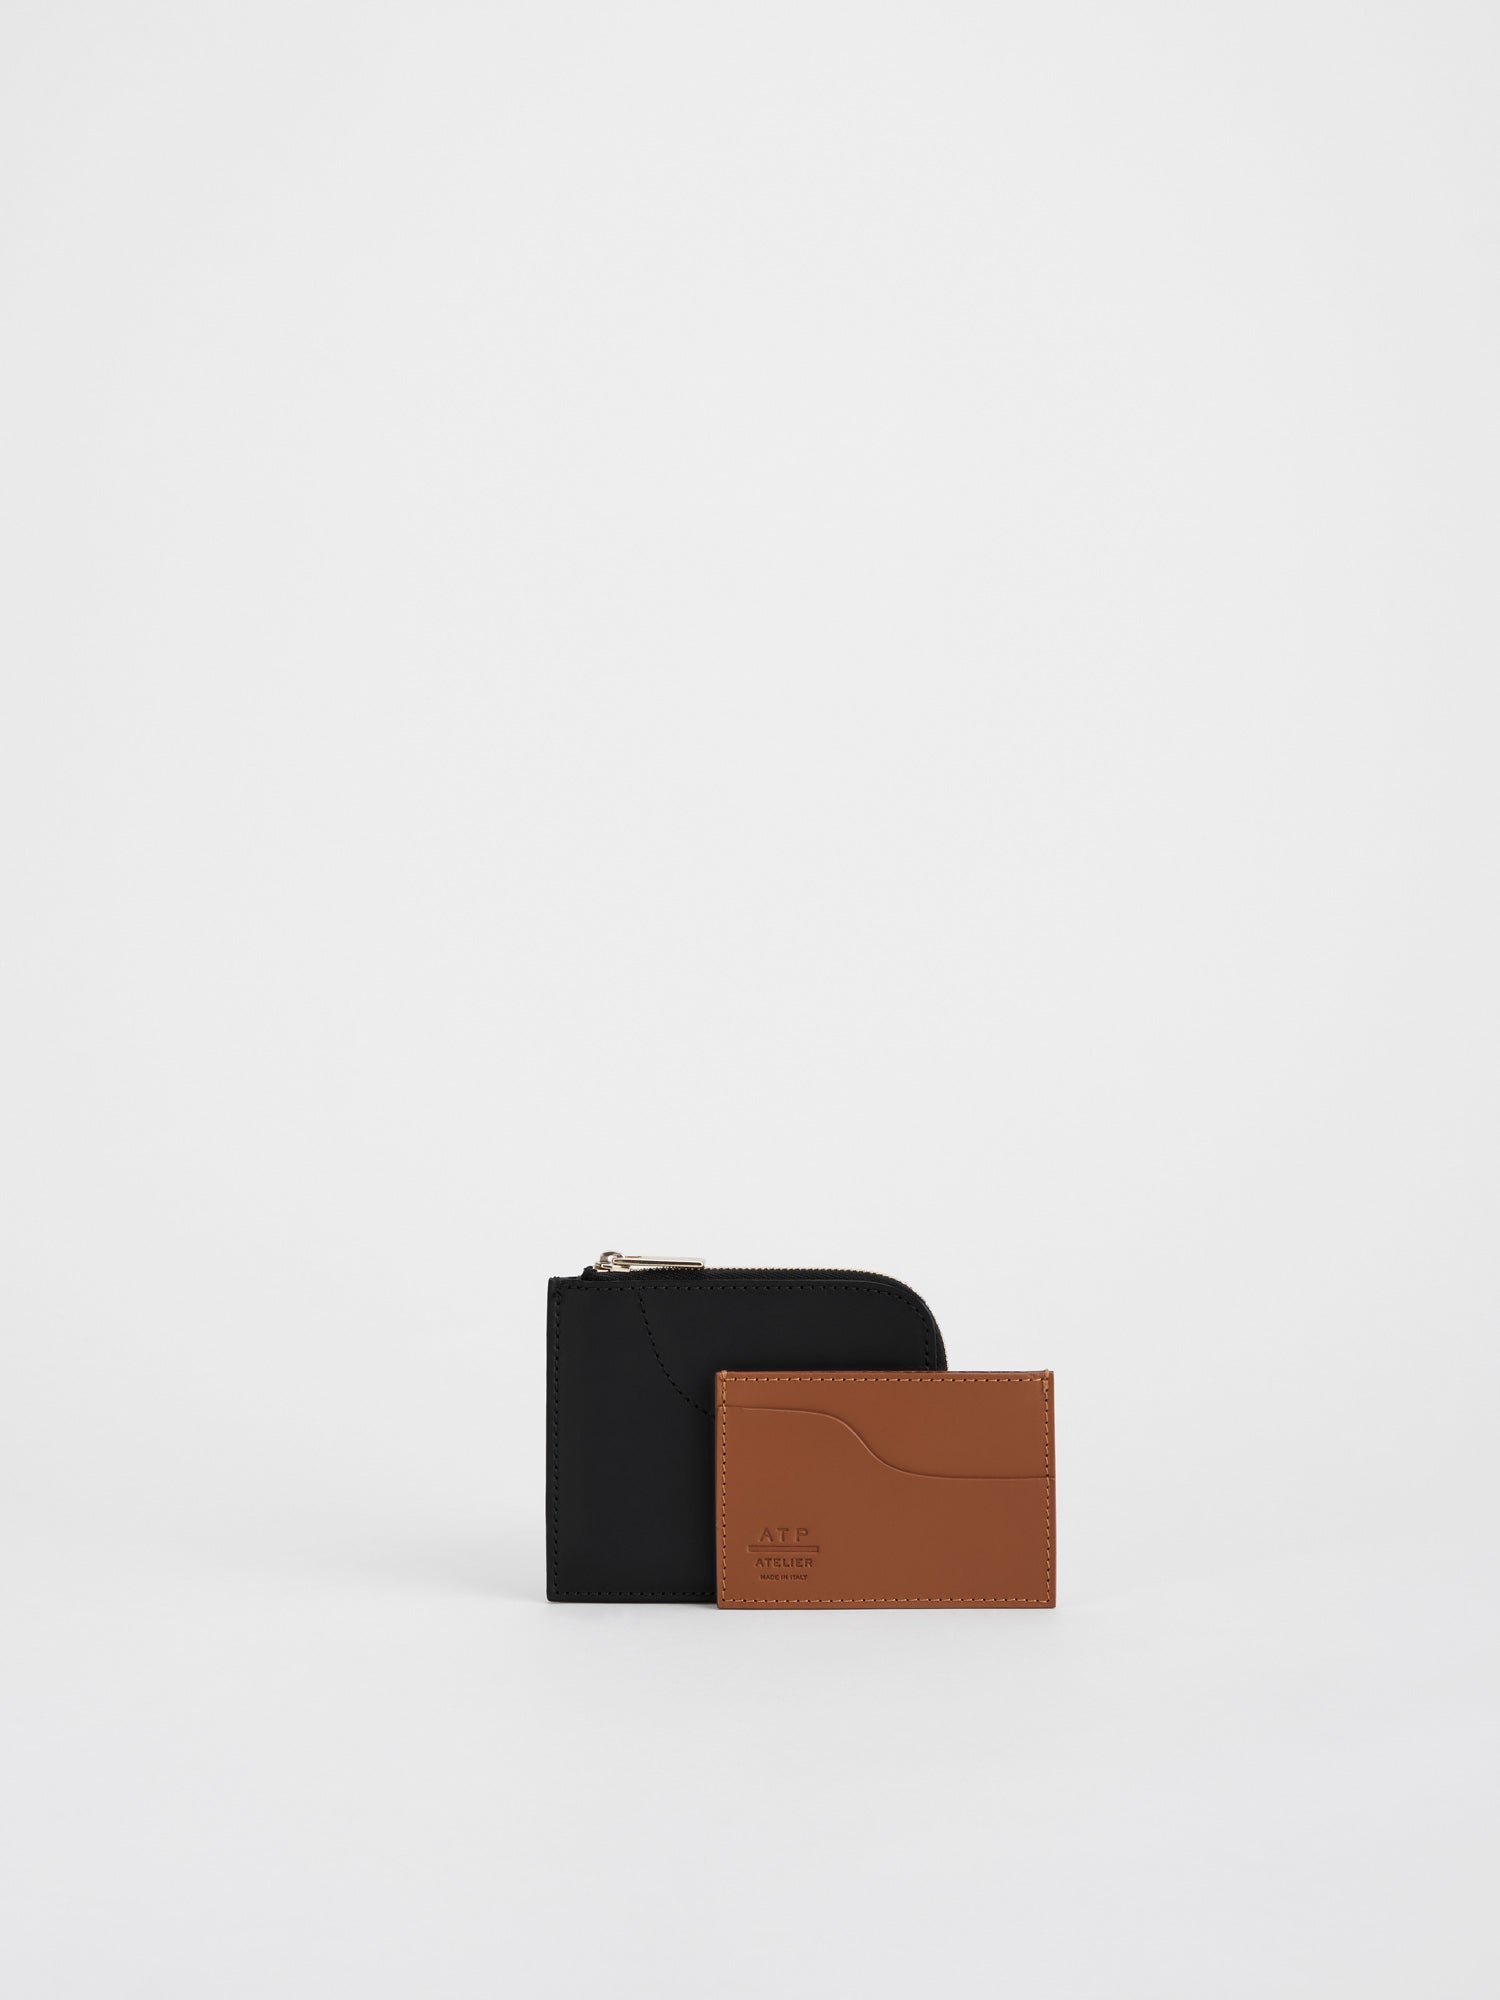 Vernio Black Leather Wallet